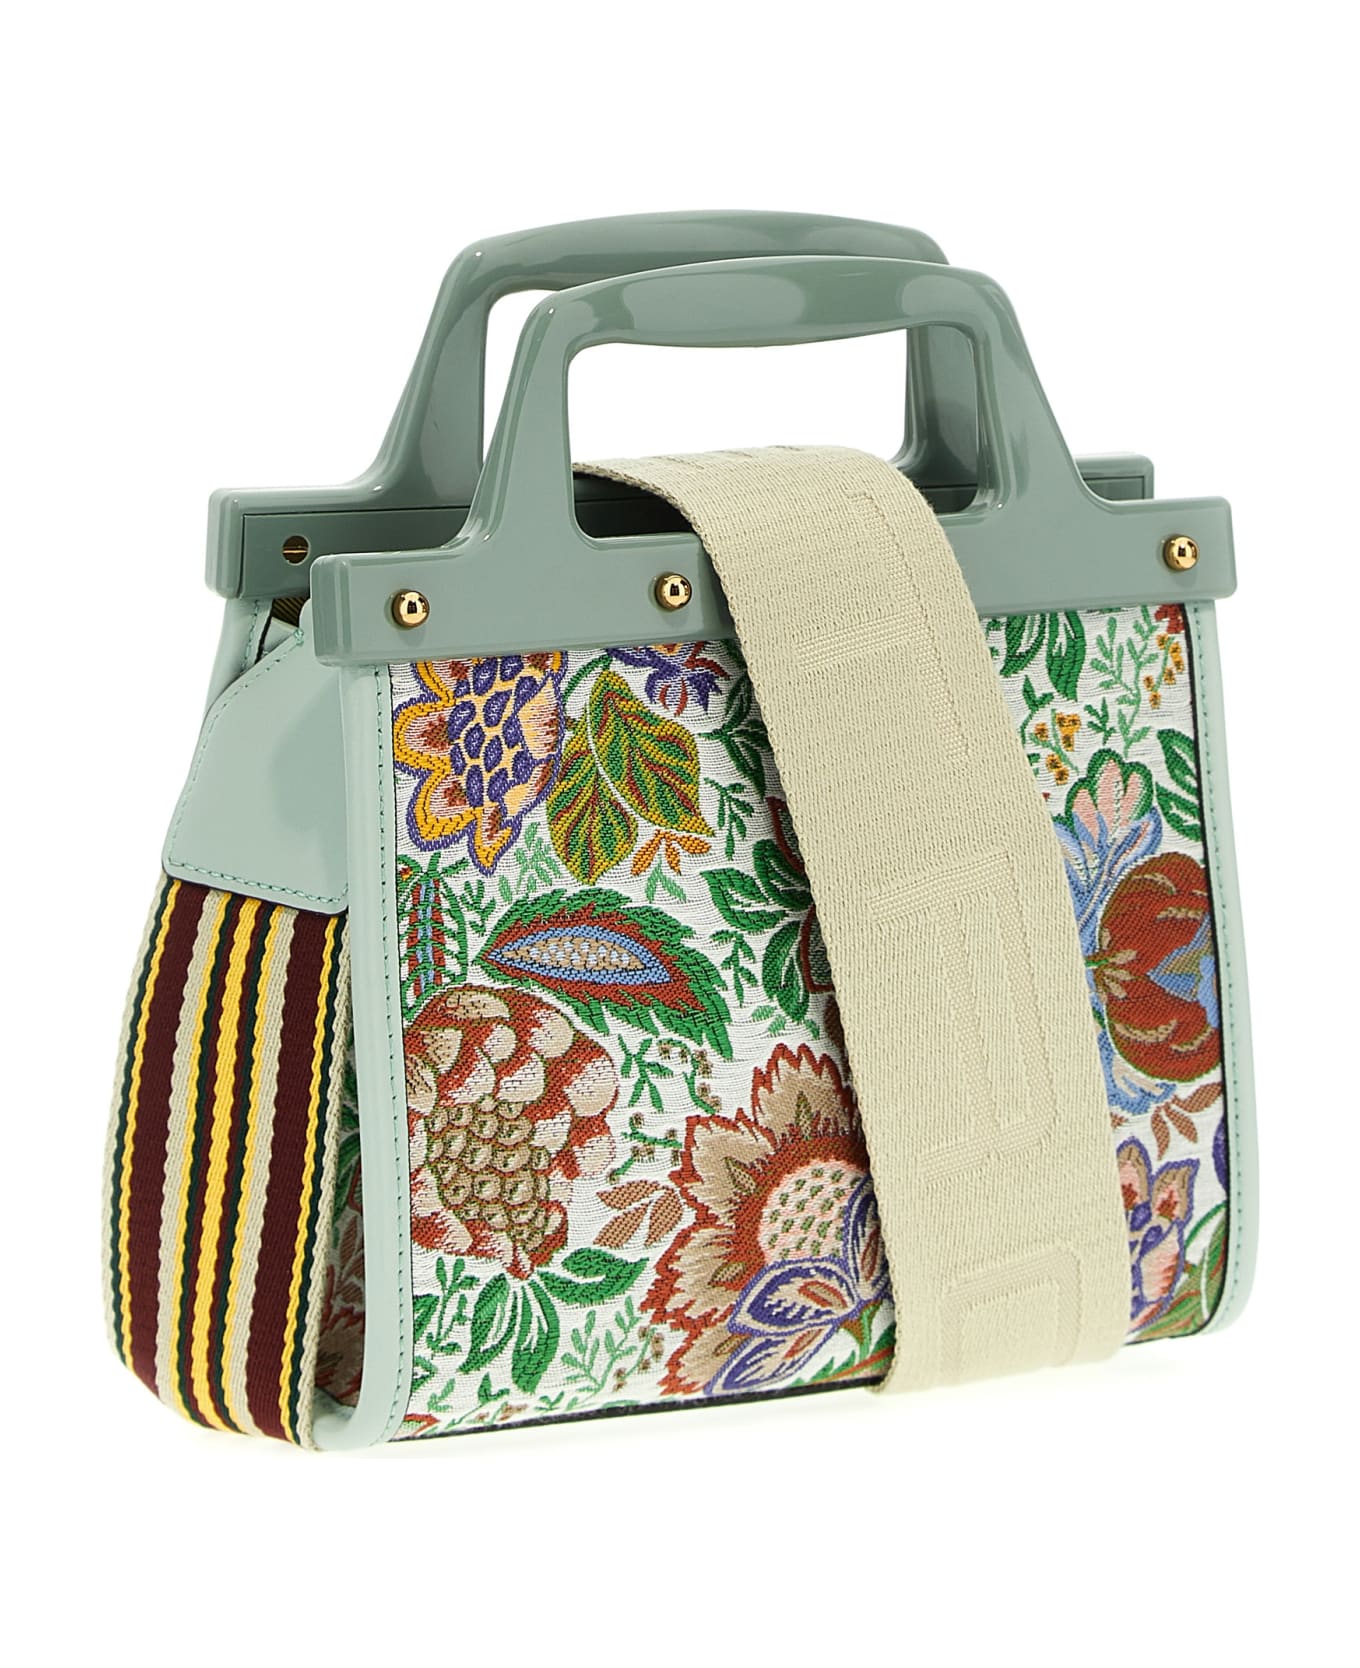 Etro 'love Trotter' Small Shopping Bag - Multicolor